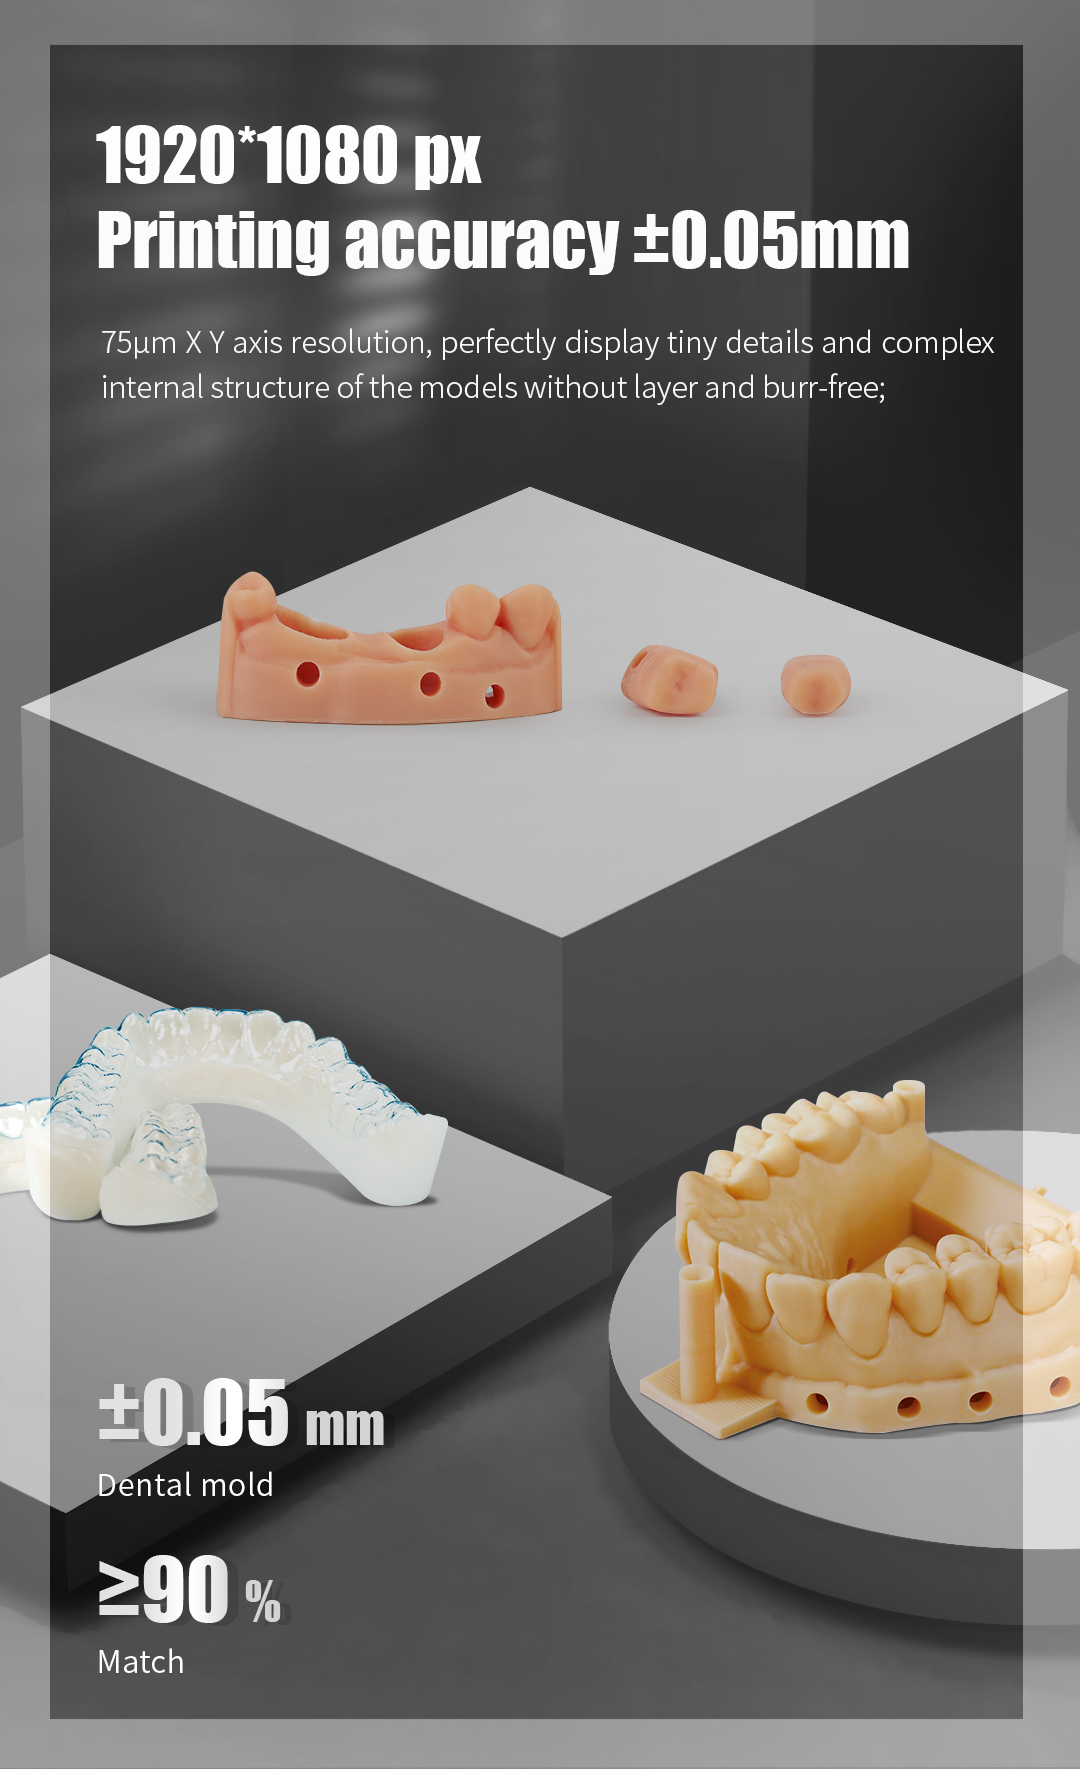 D150 Resin DLP Dental 3D Printer JSL3D